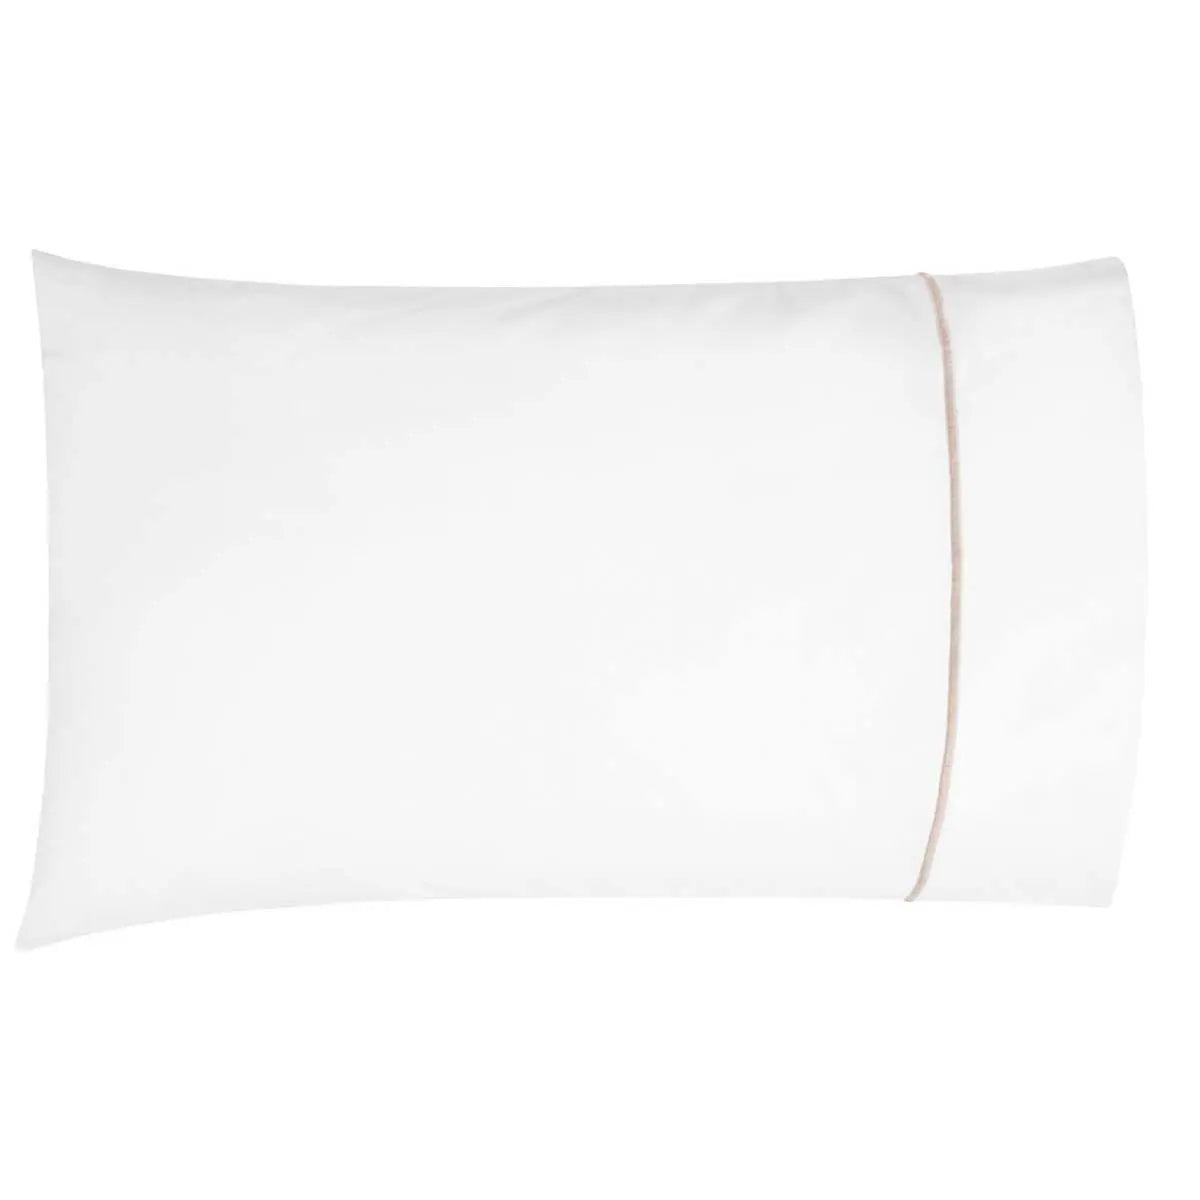 Bovi Classic Hotel Pillowcase Pair in White/Taupe 